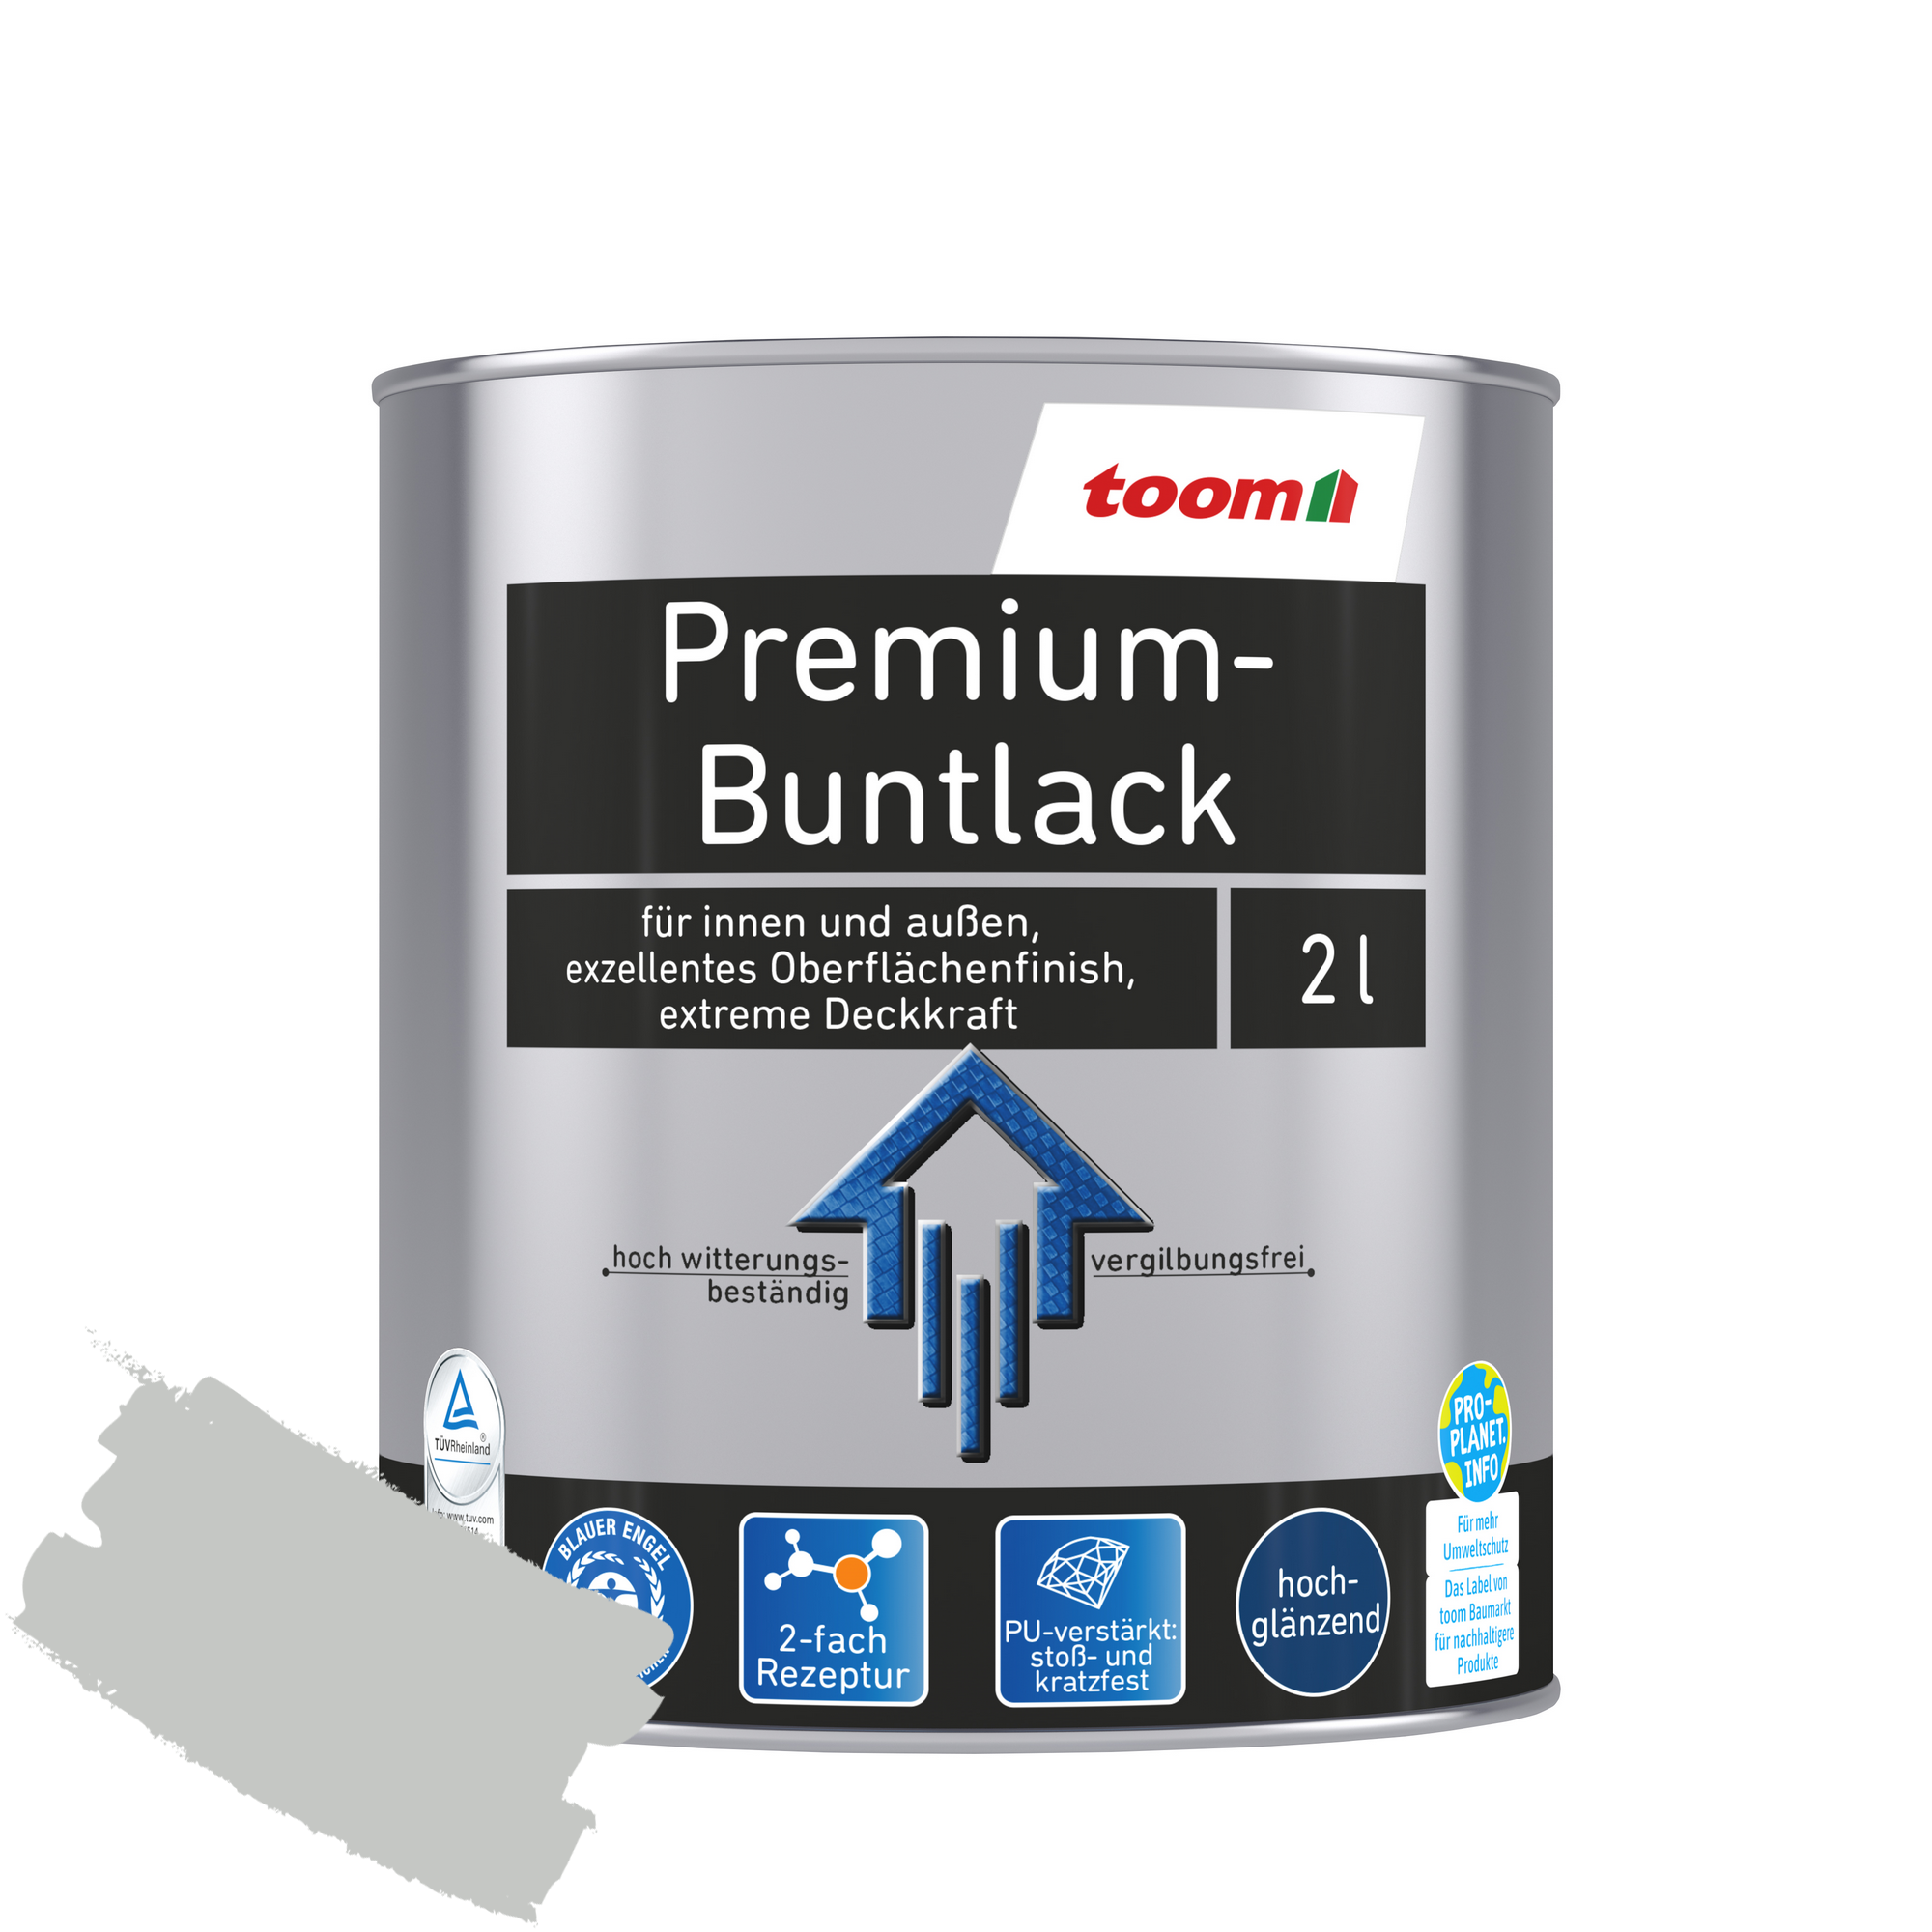 Premium-Buntlack lichtgrau glänzend 2 l + product picture